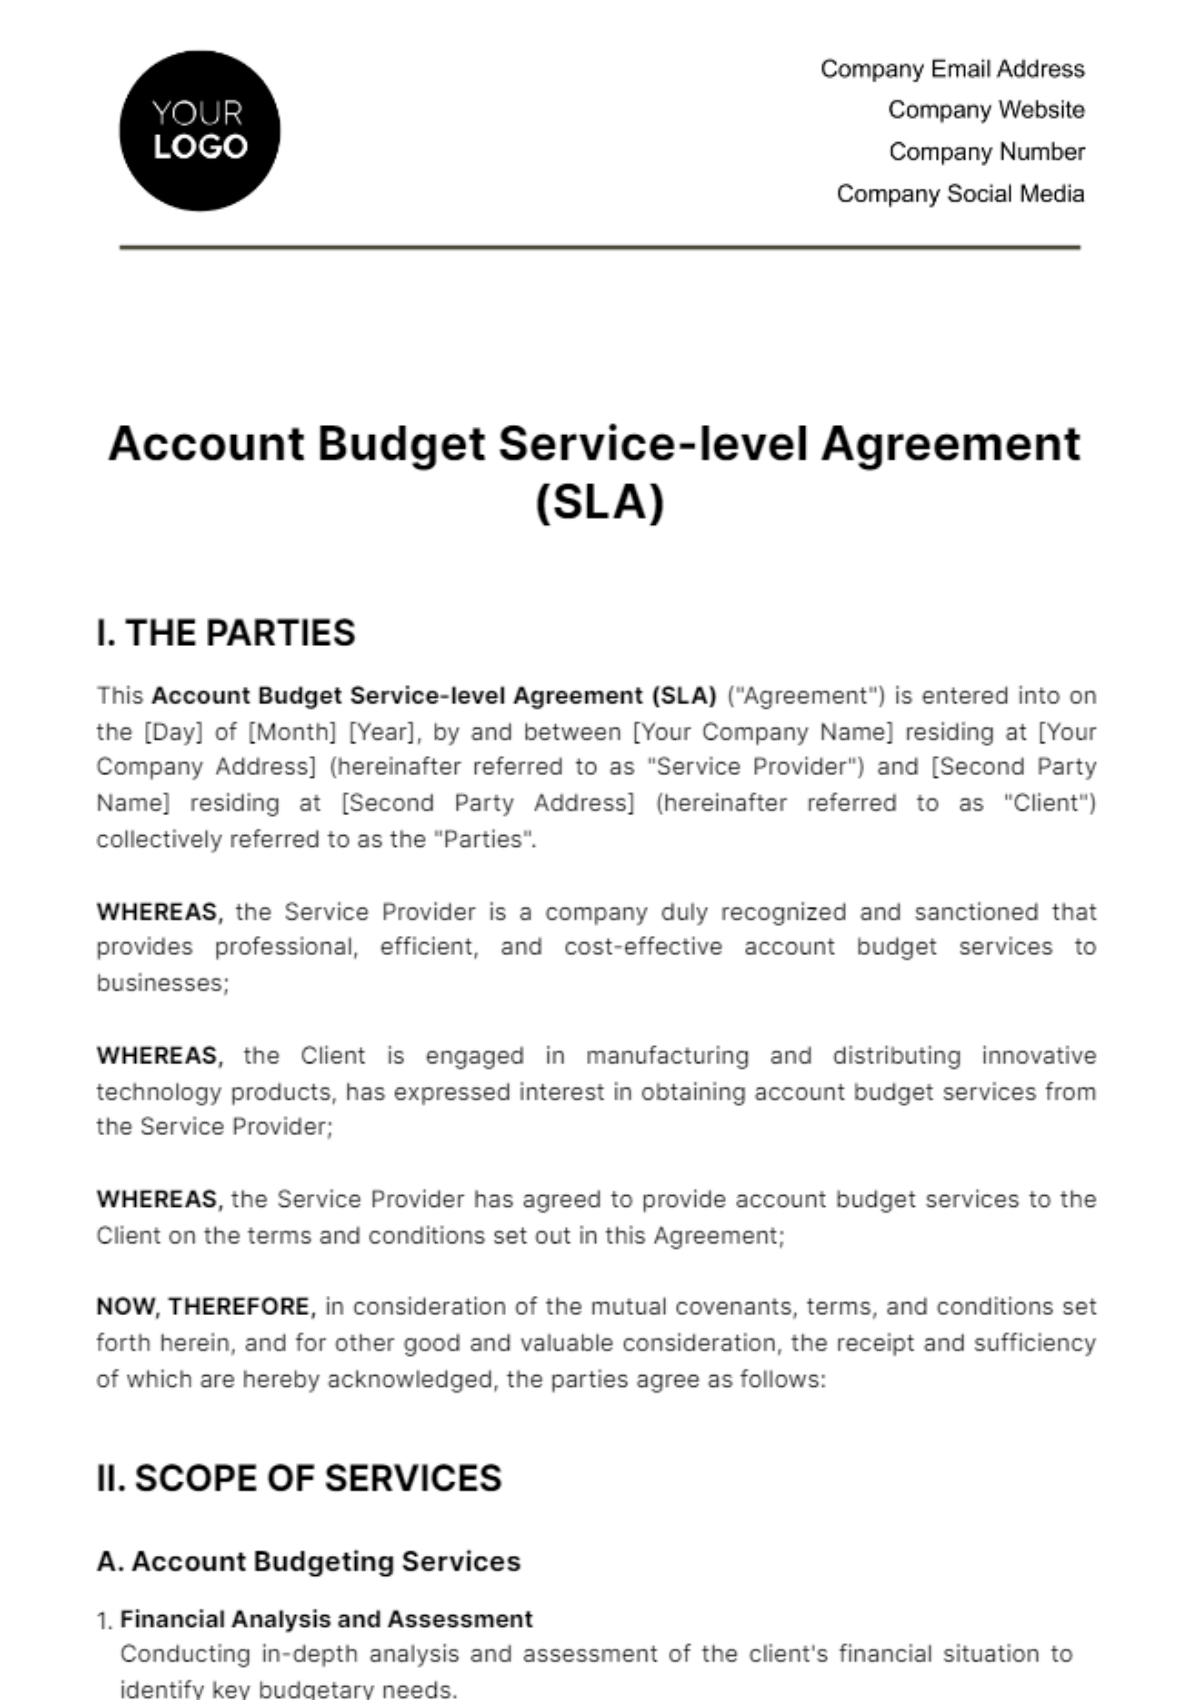 Account Budget Service-level Agreement (SLA) Template